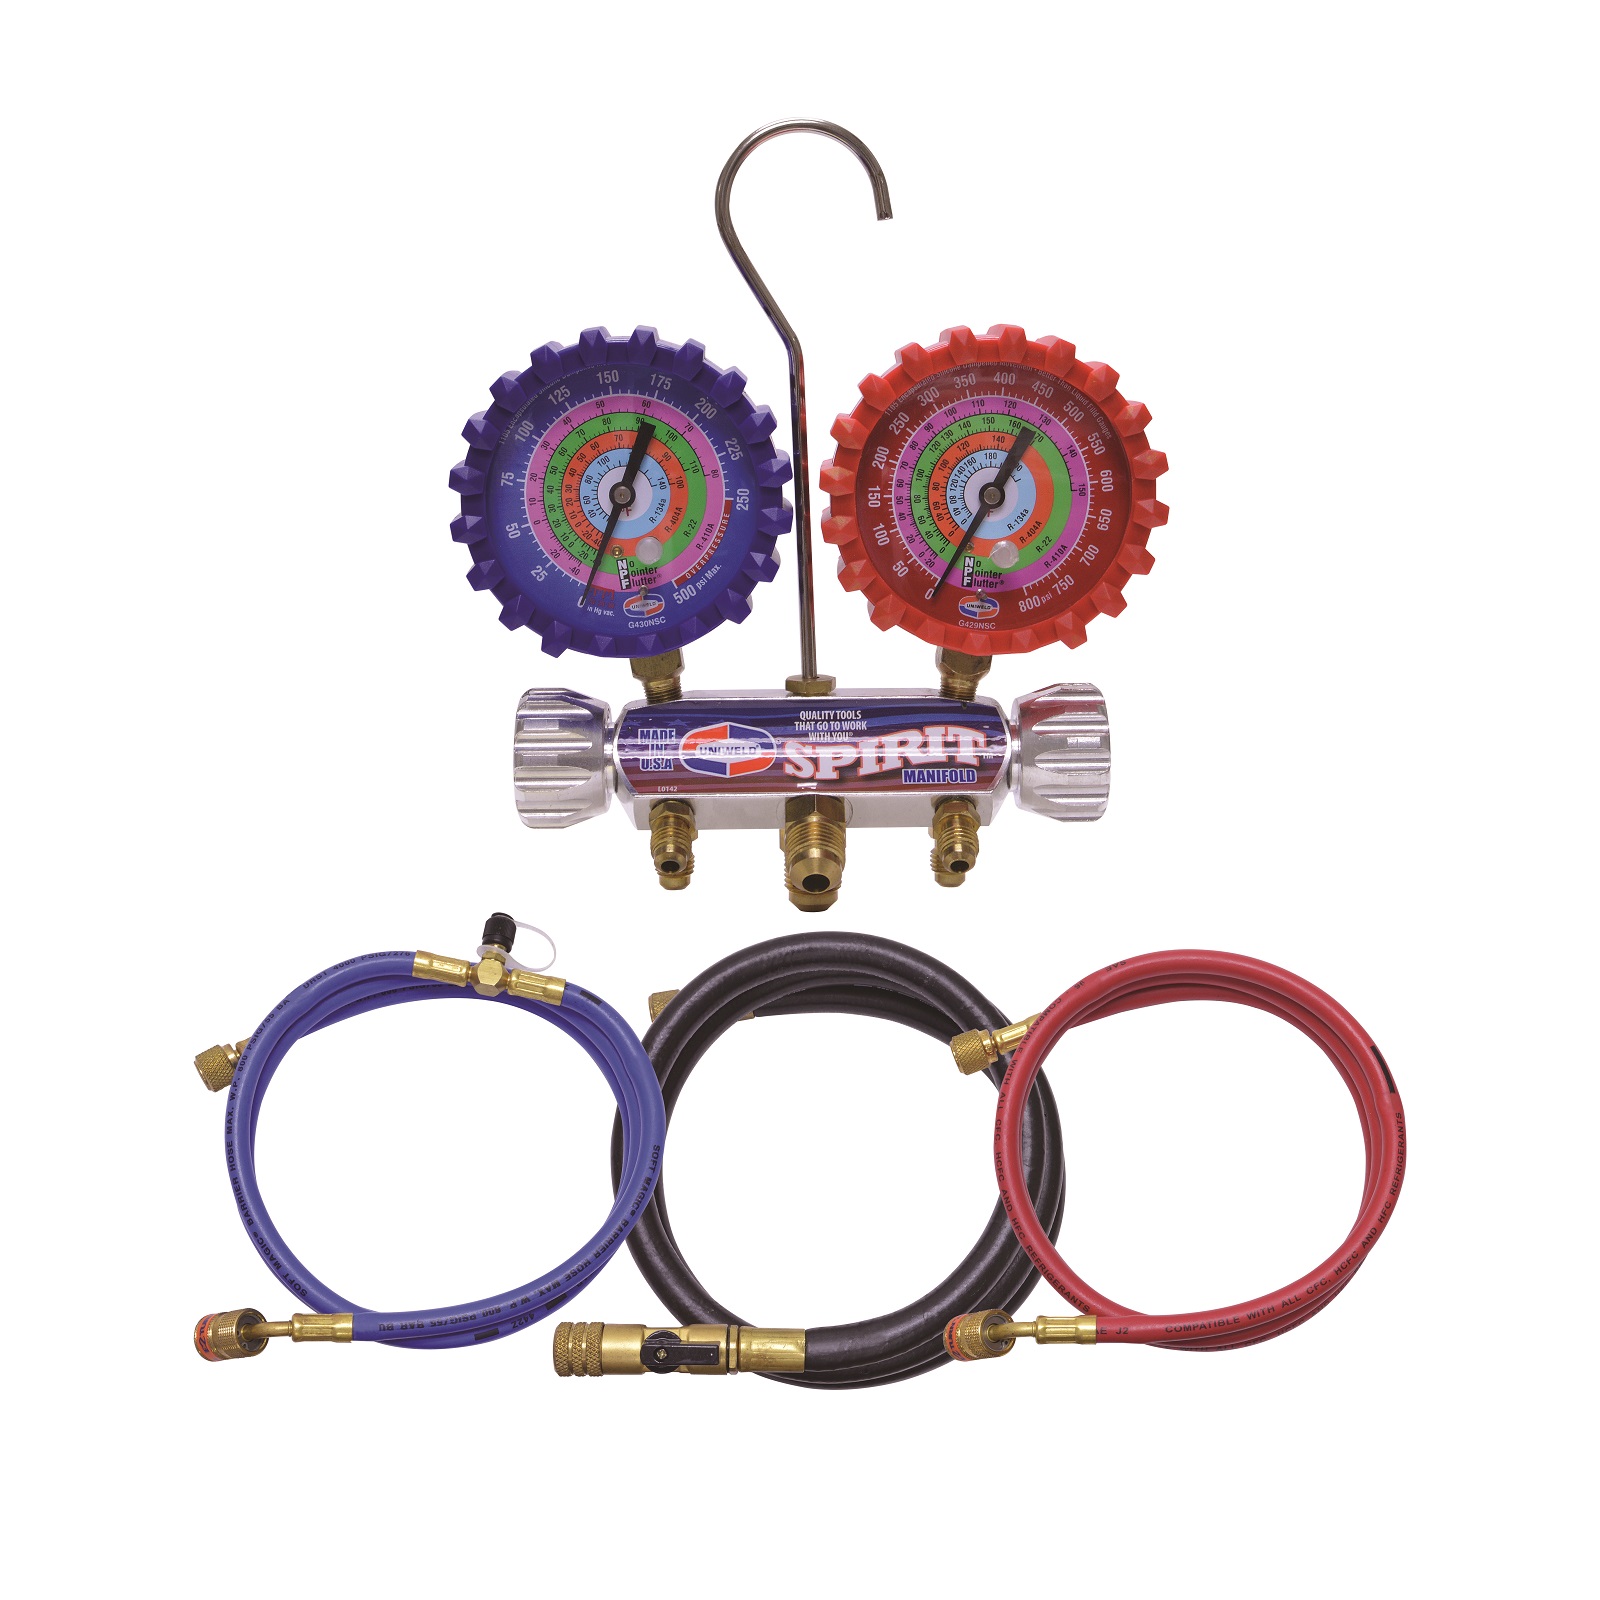 Uniweld Metal Wheel Handle Kit for The 2 Valve Manifold #mw2 Gauge Set Parts for sale online 